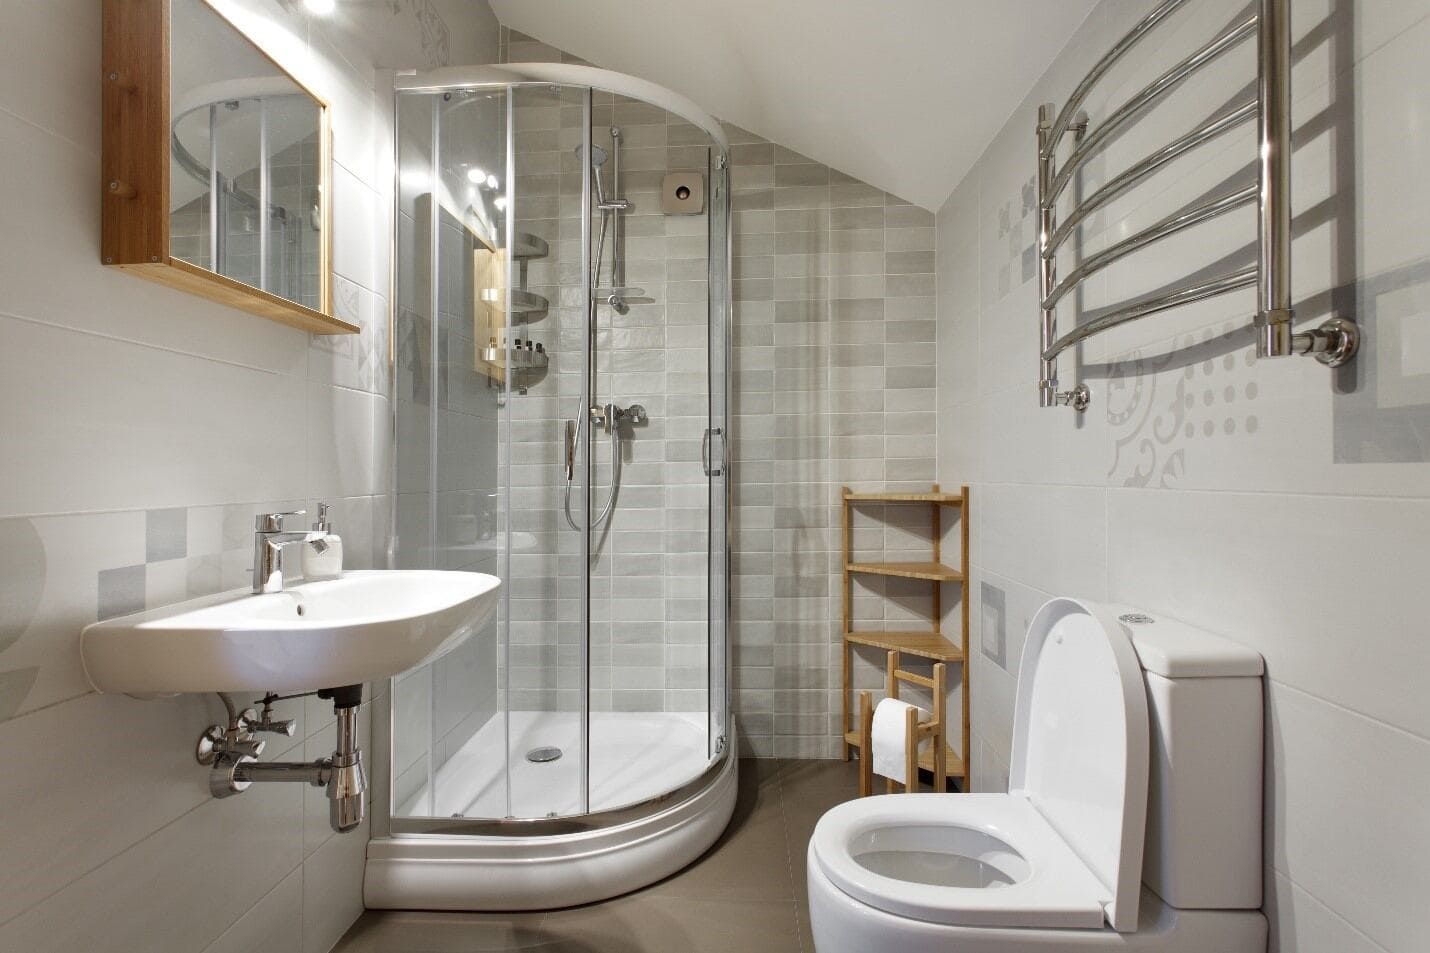 A small bathroom designed with custom shower doors